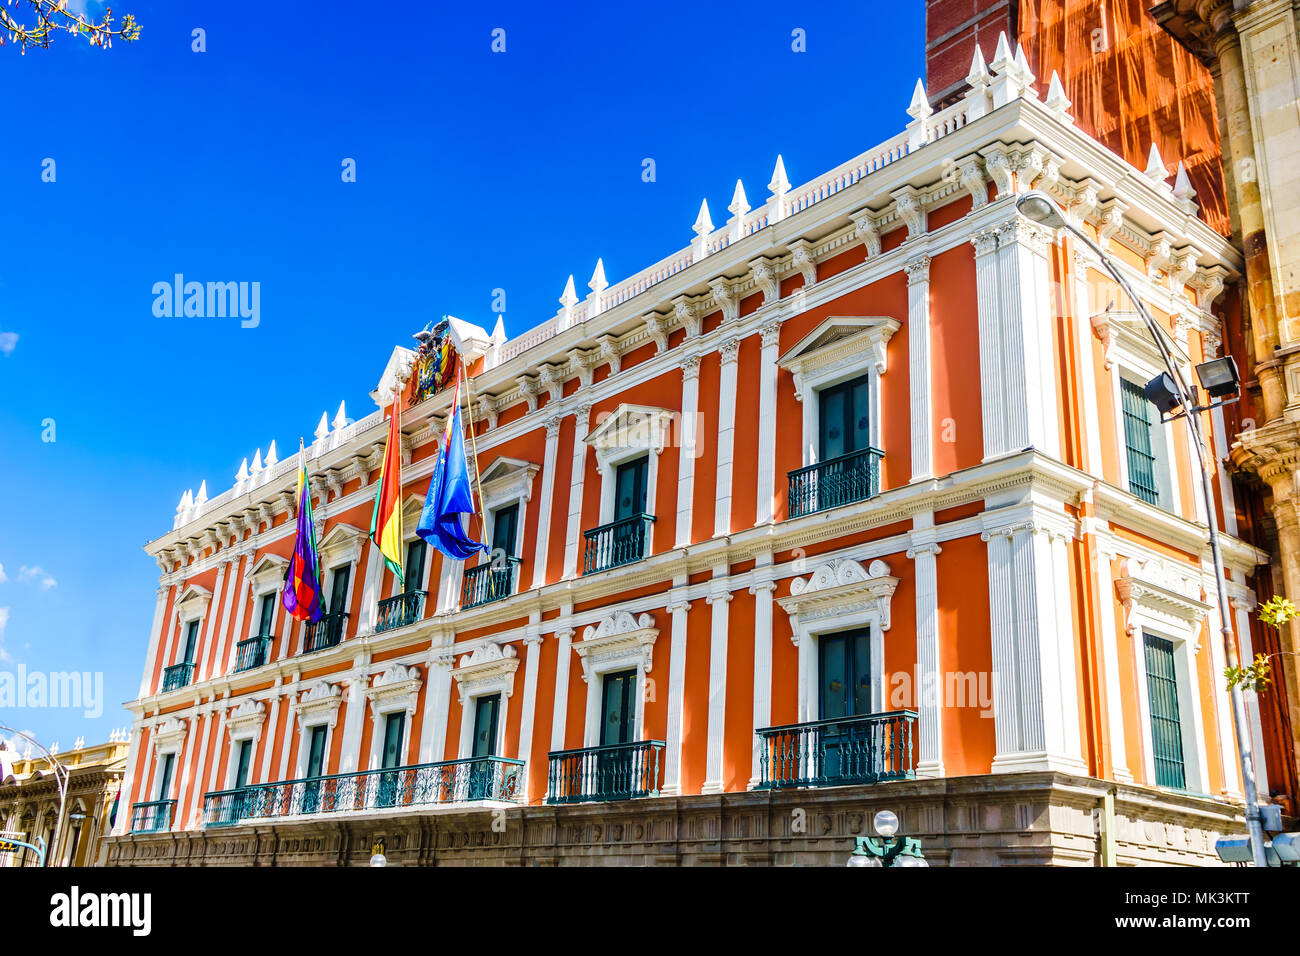 View on bolivian Palace of Government - Palacio Quemado - in La Paz - Bolivia Stock Photo